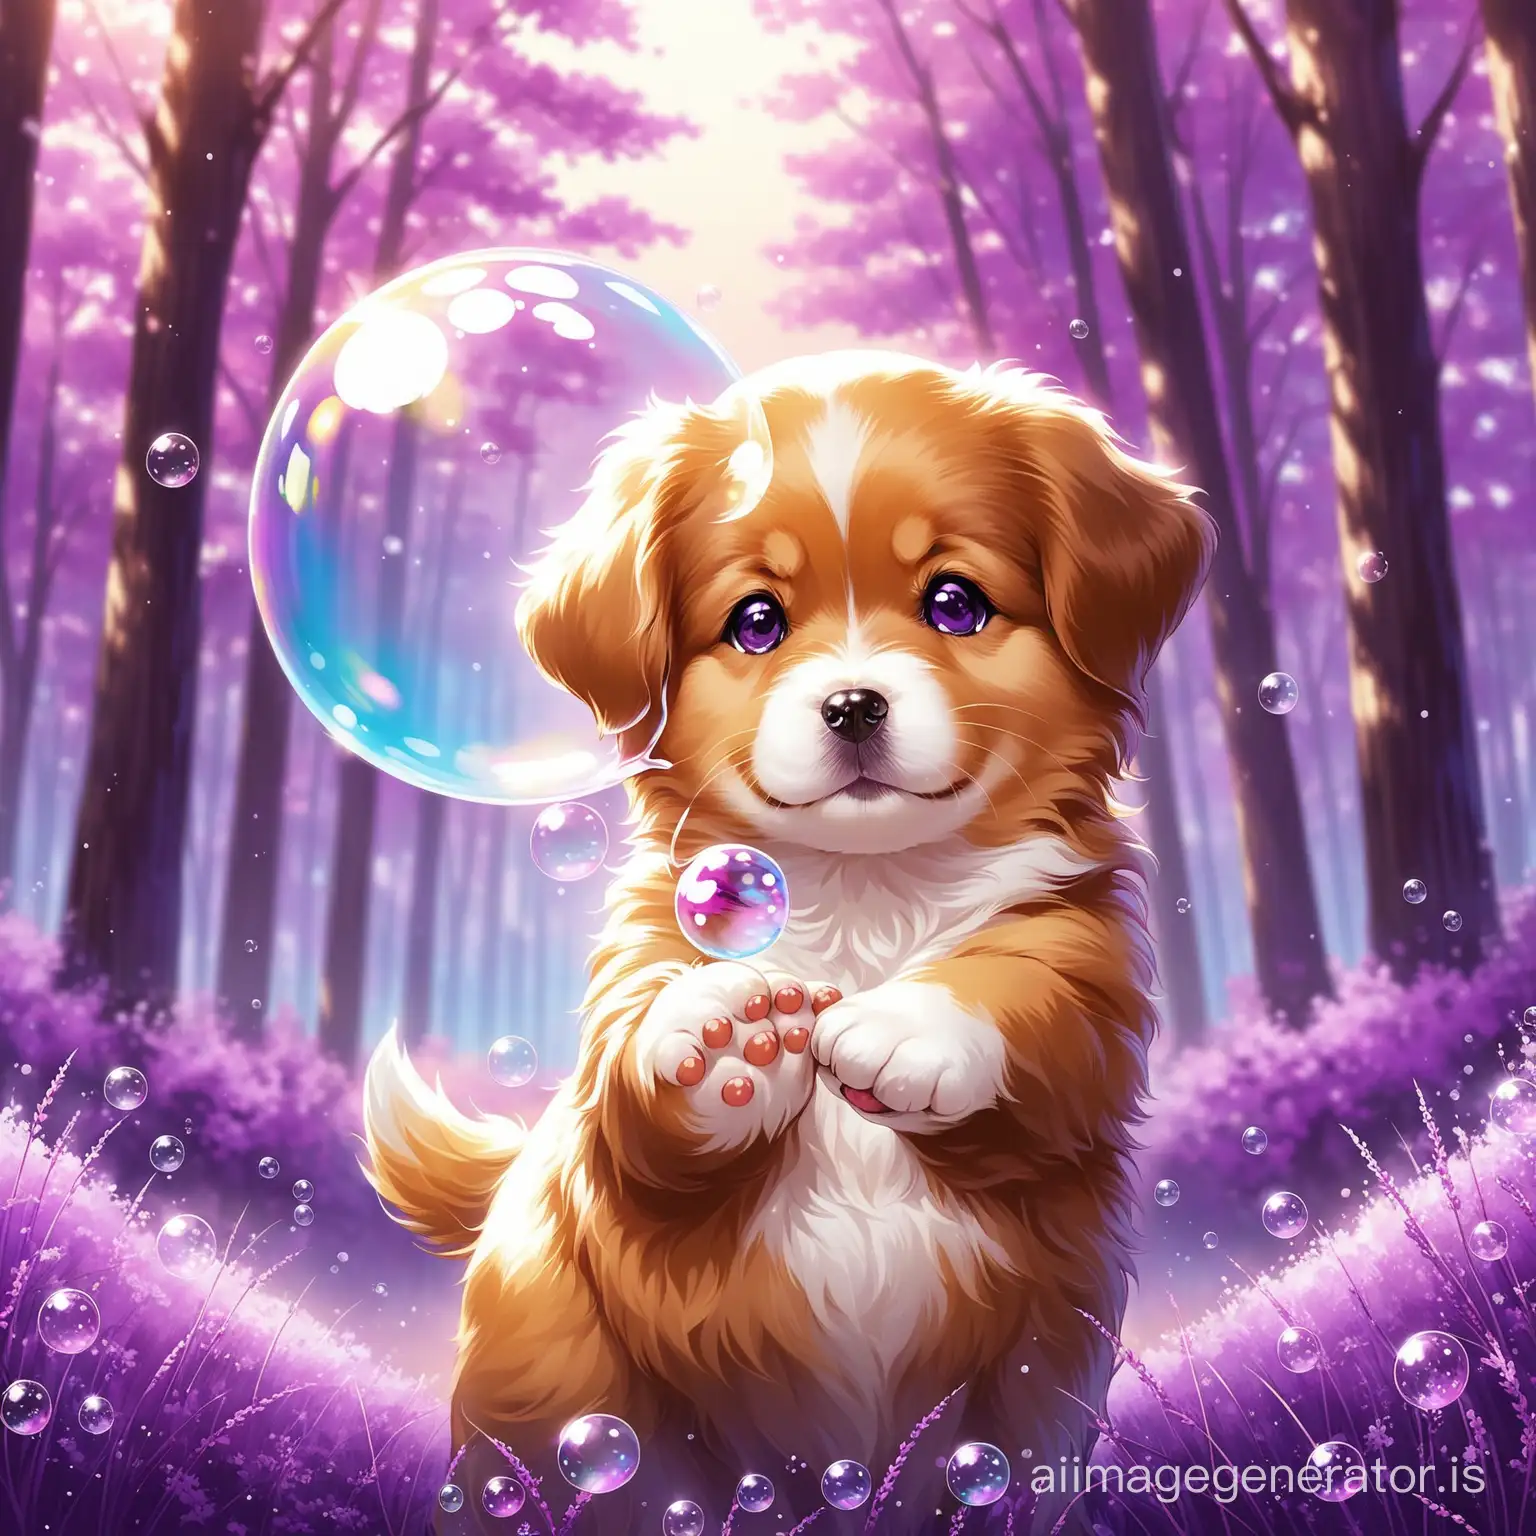 Adorable-Puppies-in-a-Vivid-Purple-Landscape-with-Captivating-Bubbles